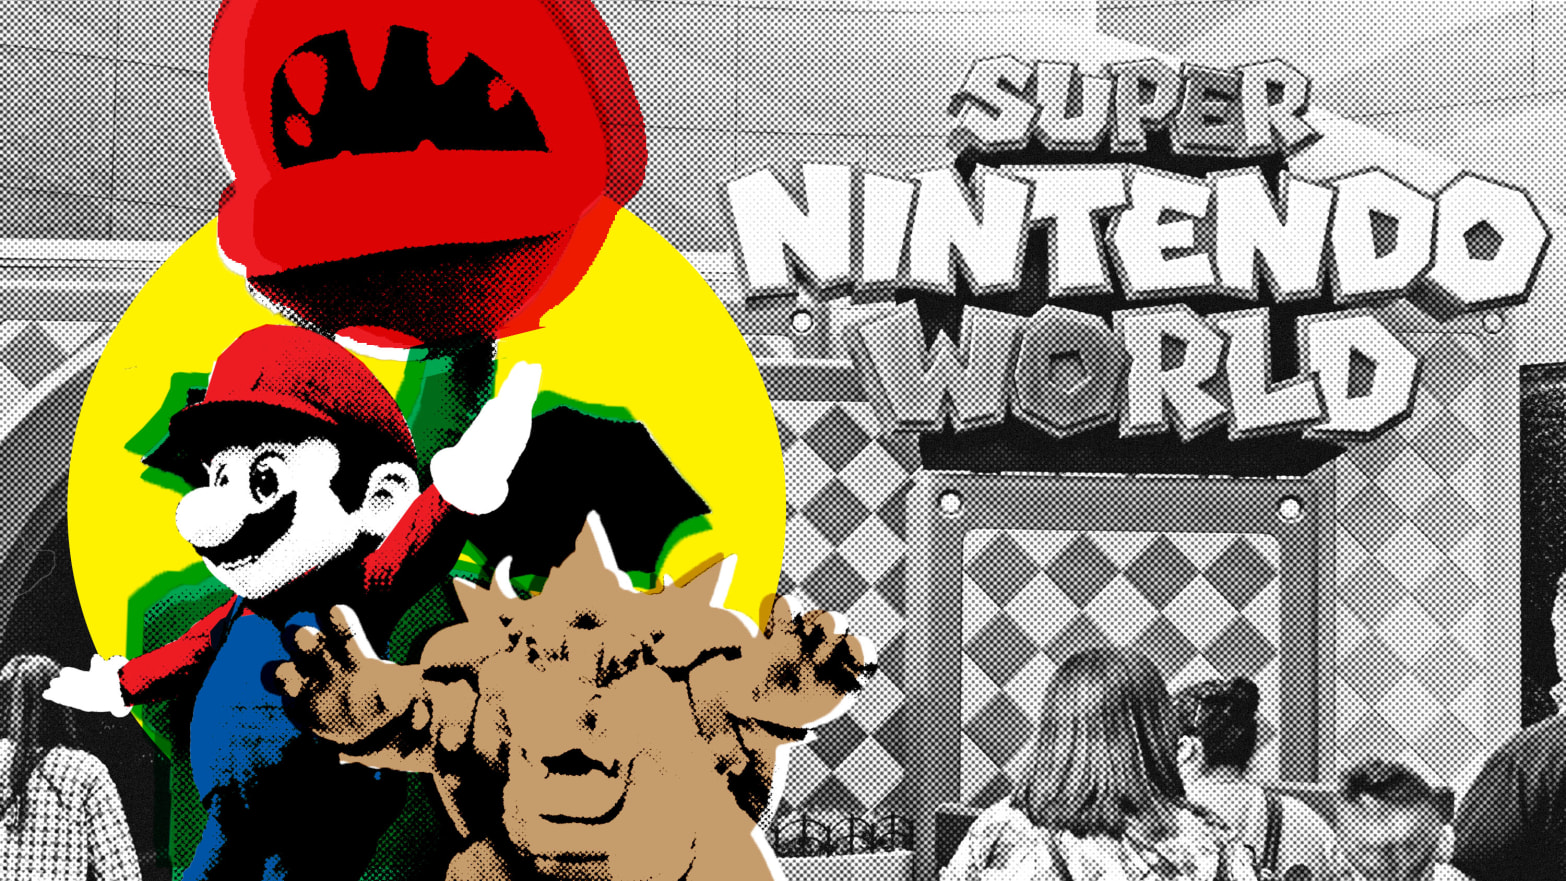 The Super Mario Bros. Movie - Bowser's World Key Art Wall Poster